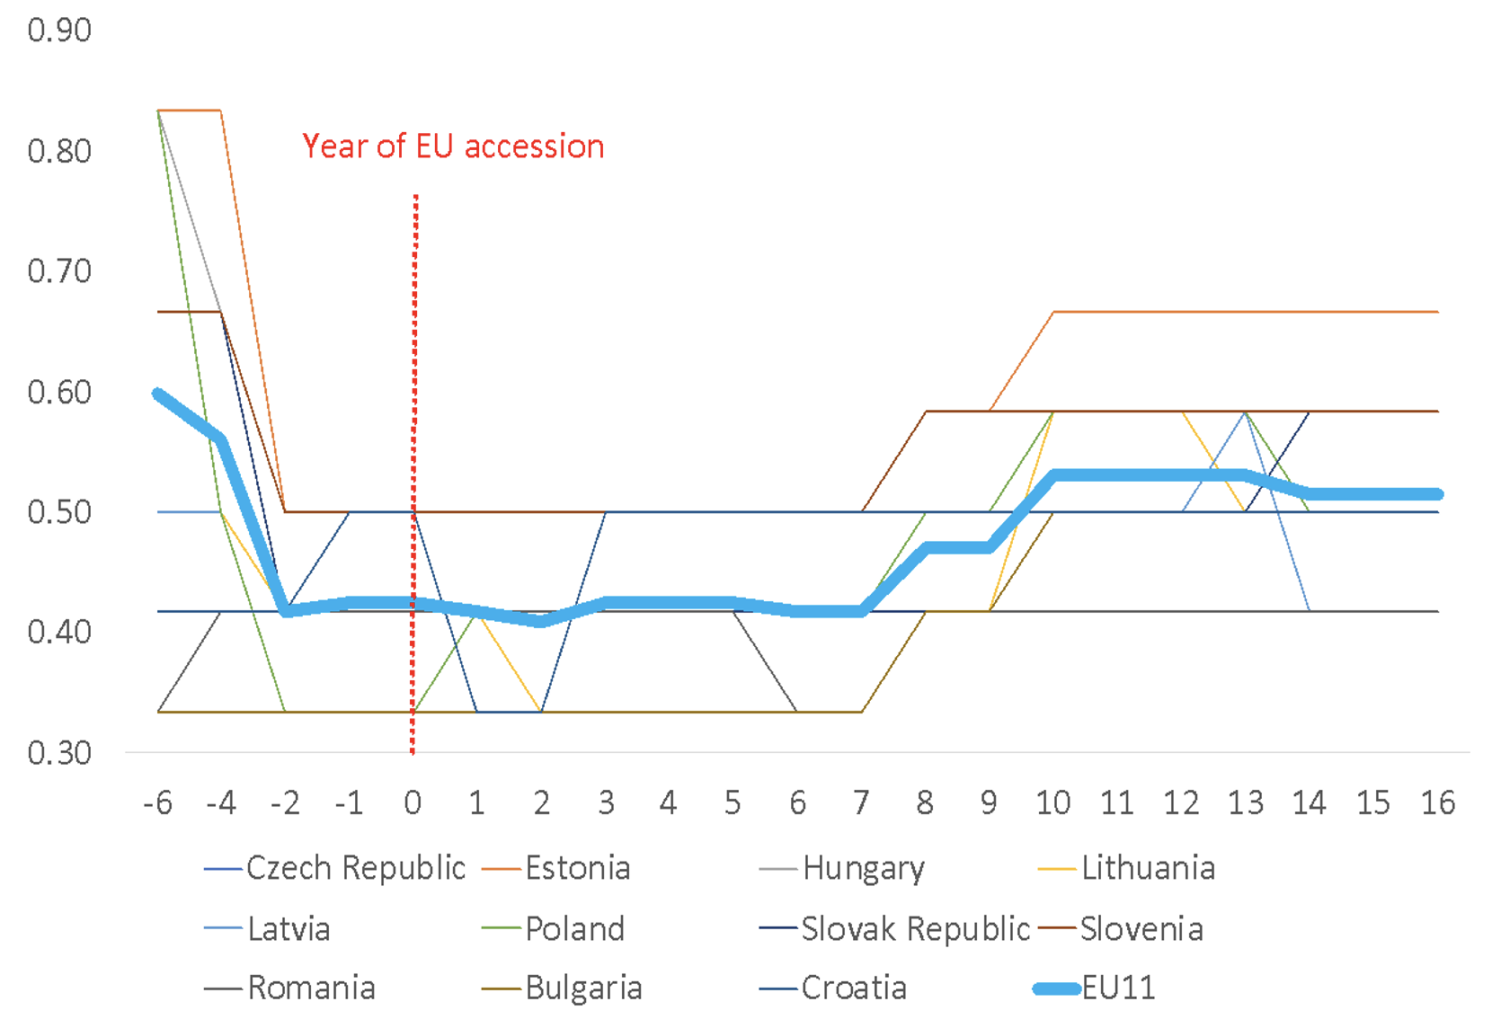 Figure 3 Corruption indicators in the EU accession process